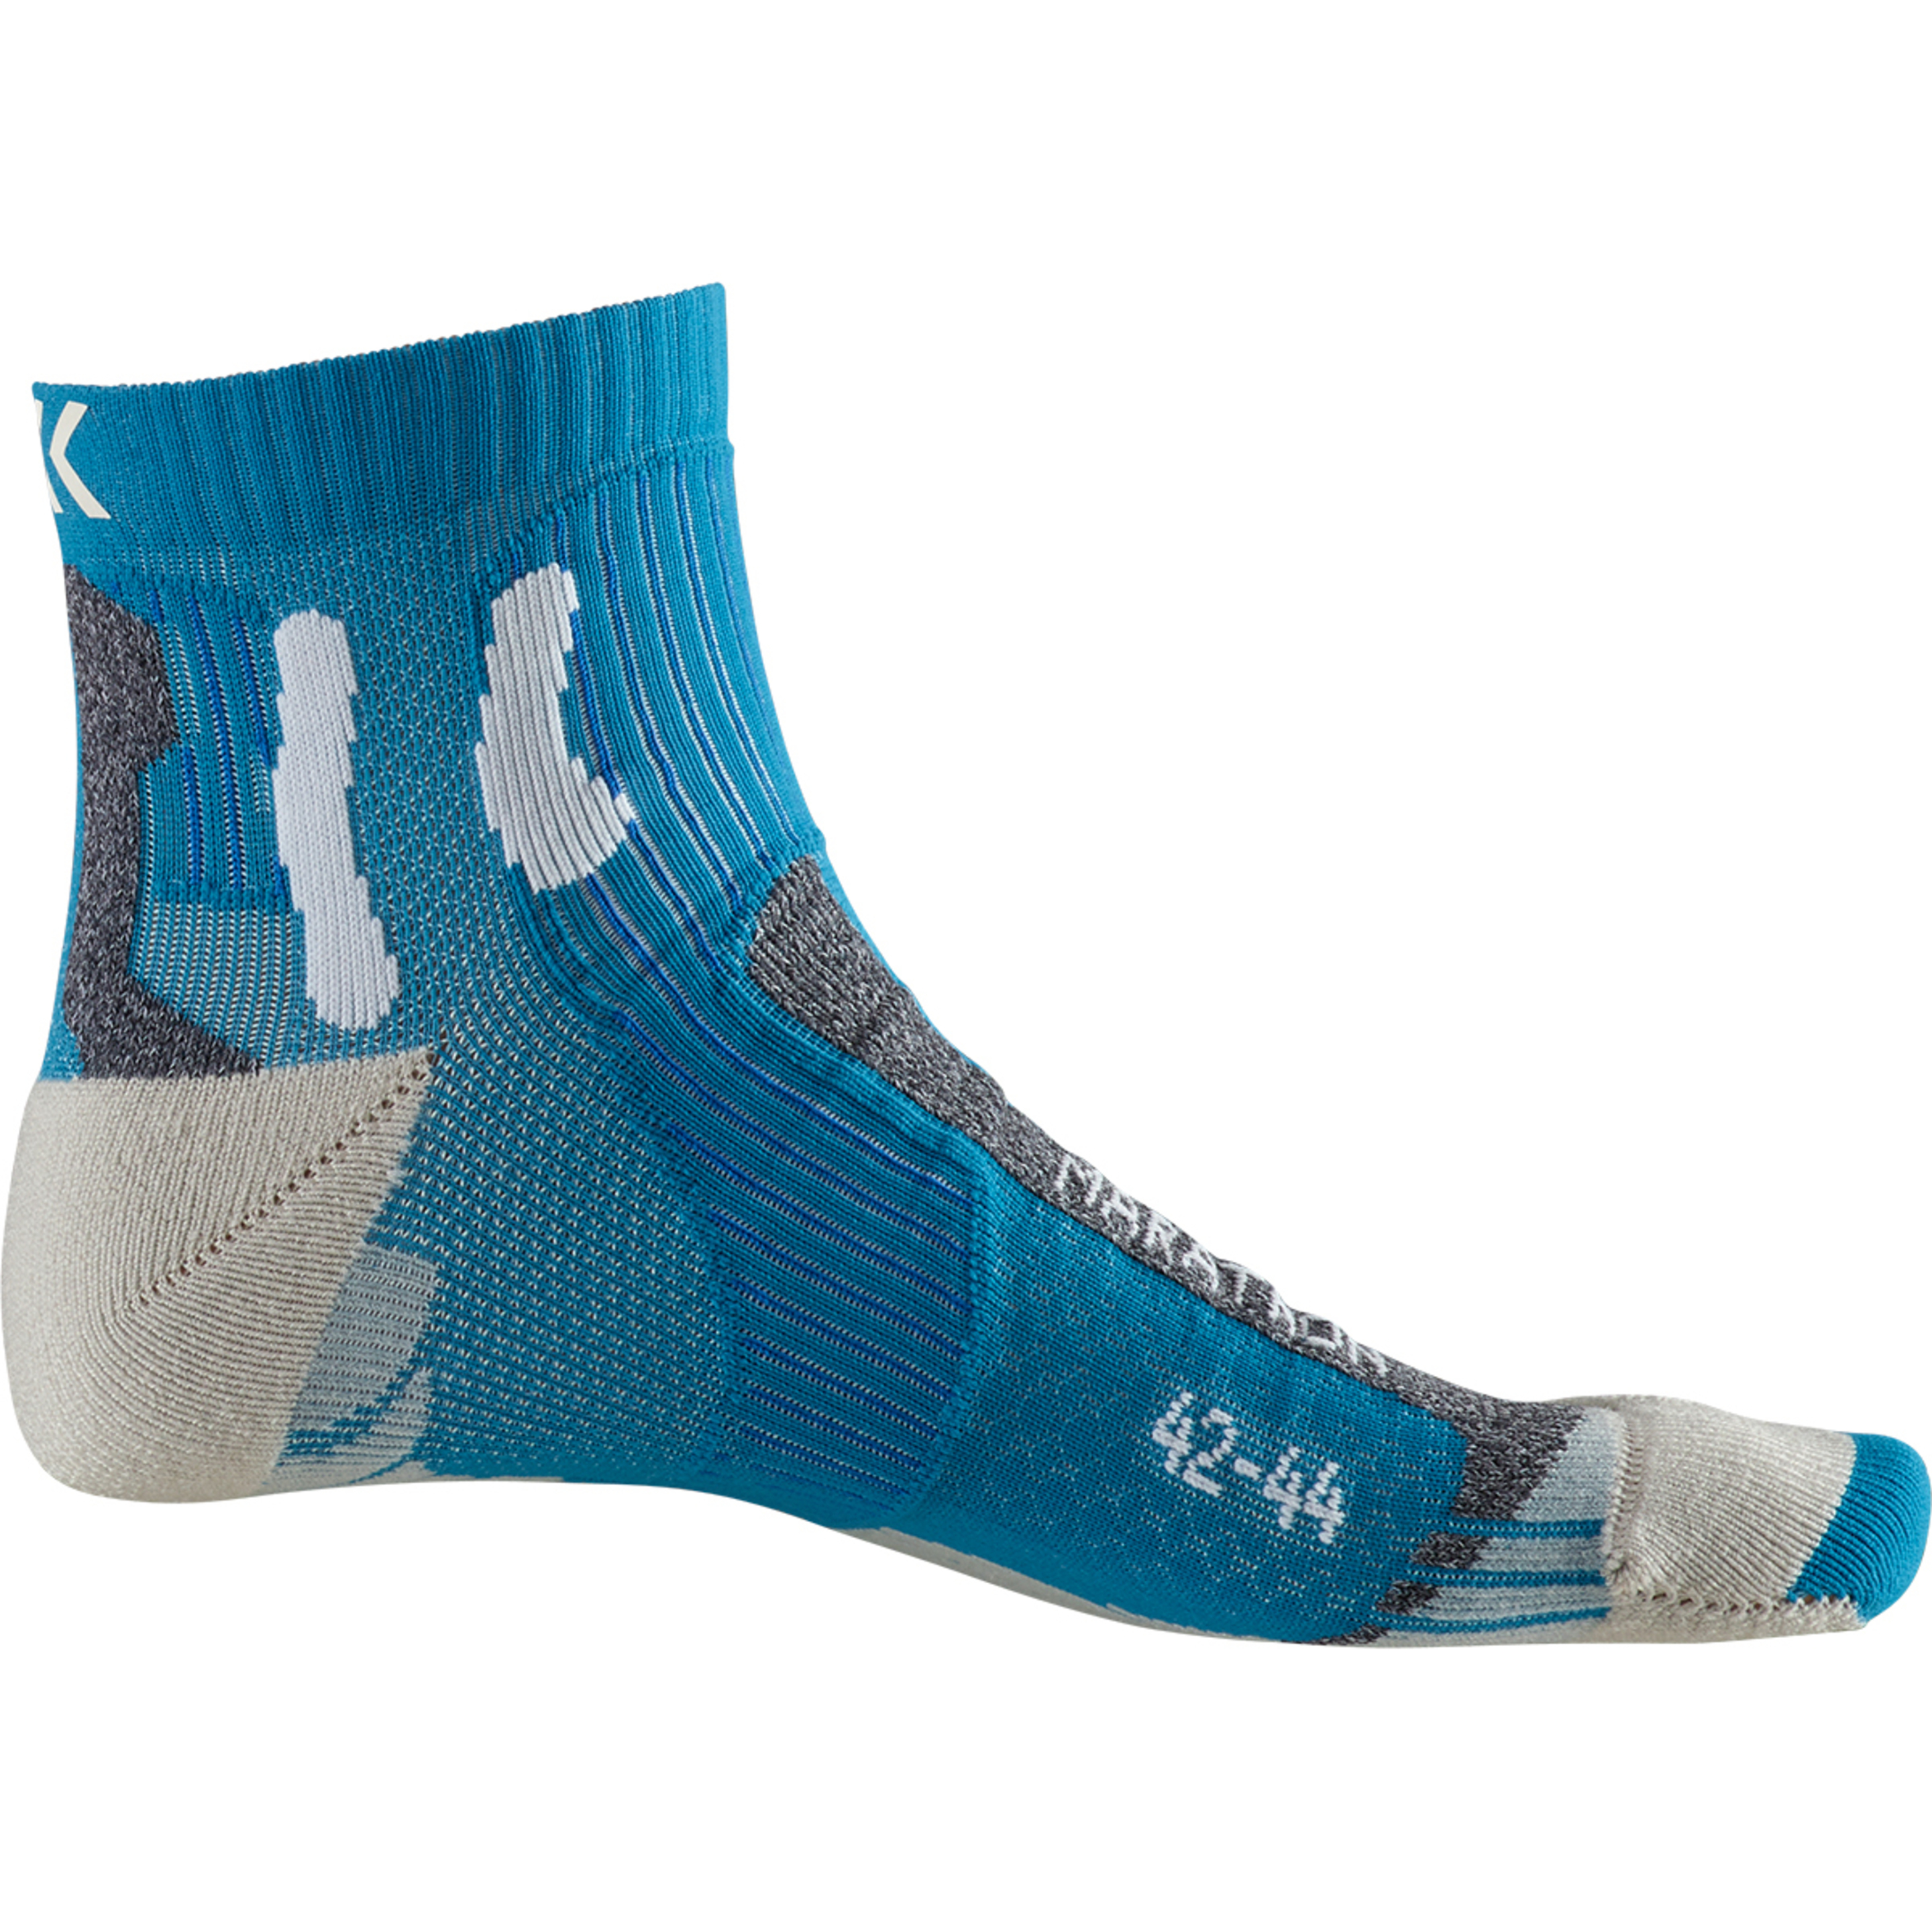 Calcetin Run Marathon Energy  X-socks - Azul  MKP